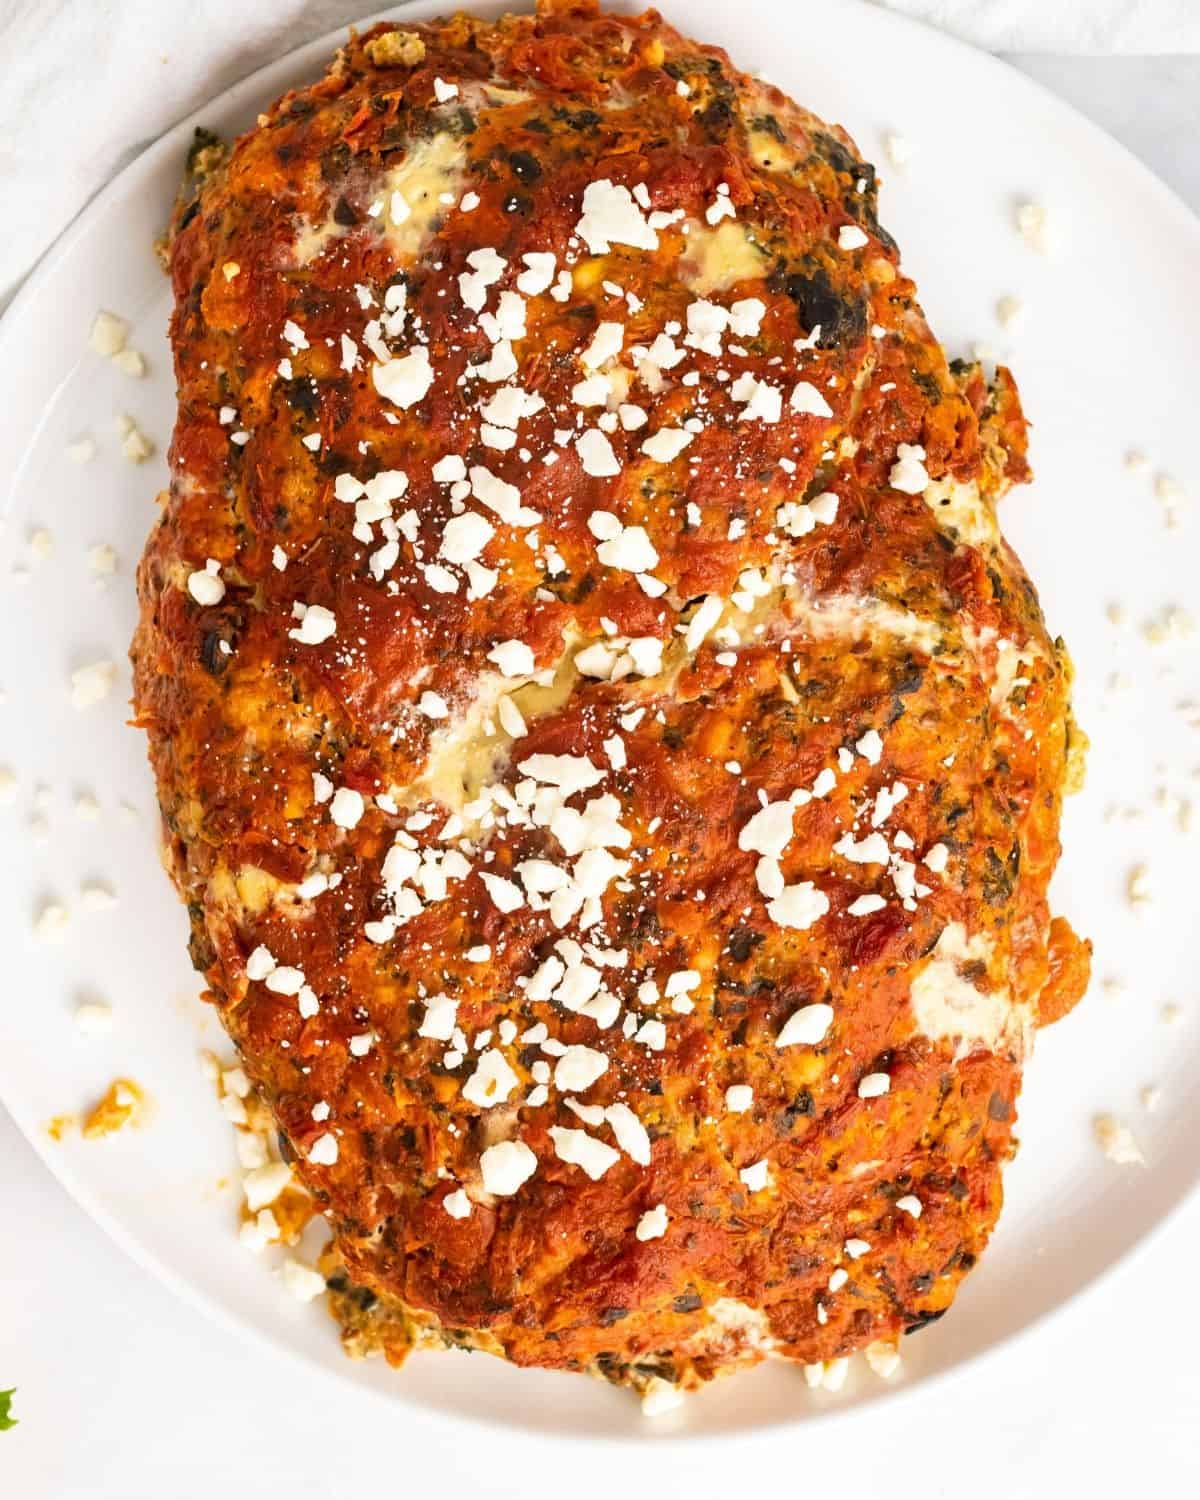 Greek meatloaf on the plate